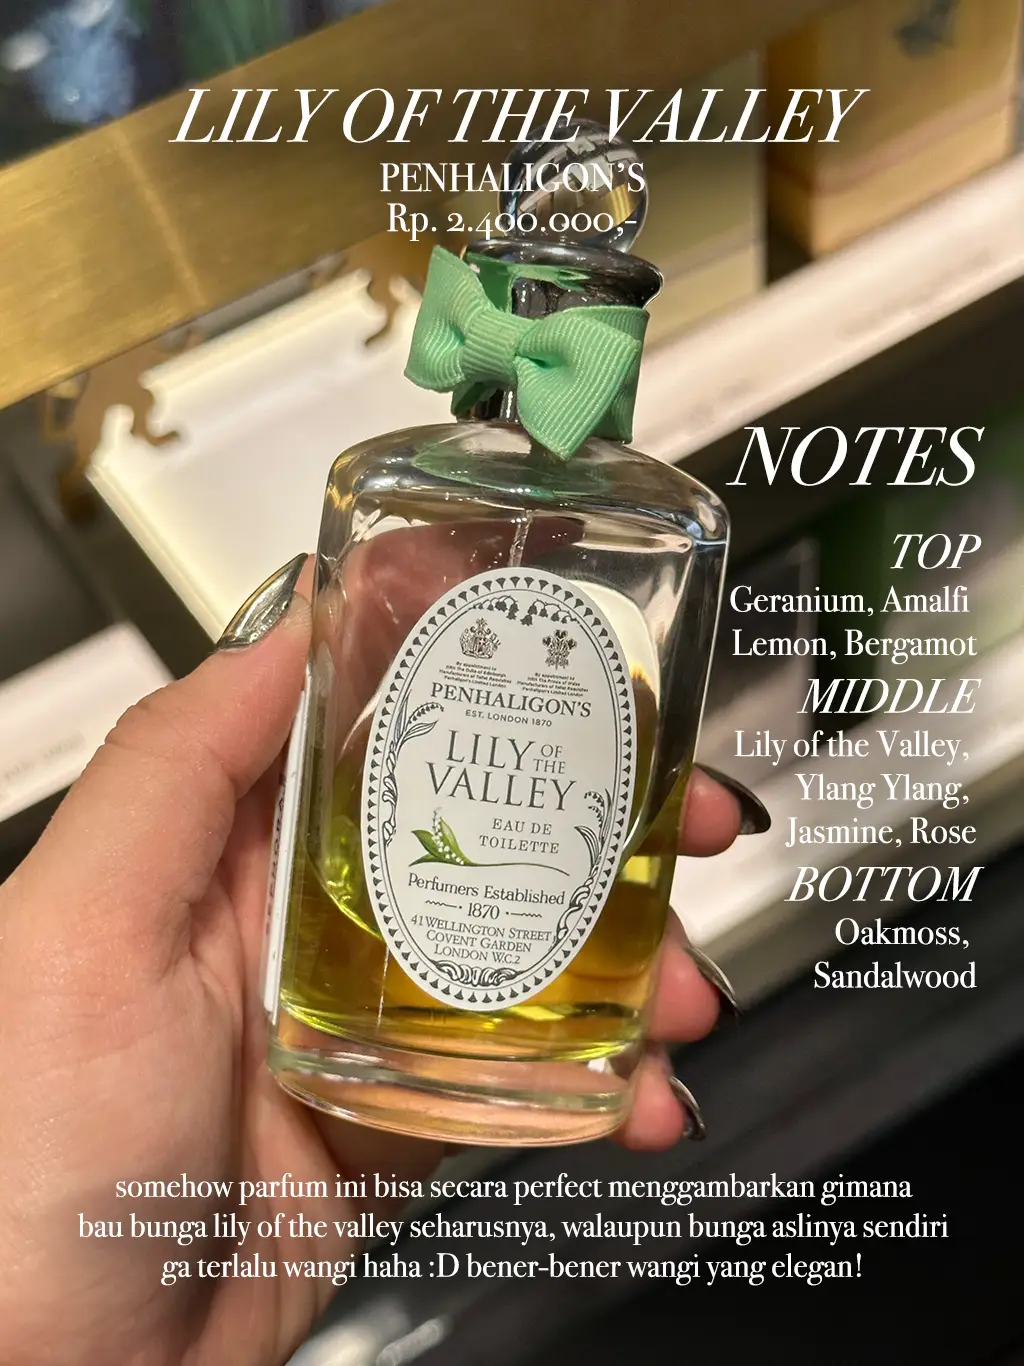 Designer Perfume Les Sables Rose 100 Ml 3.4 Oz Eau De Parfum Spray